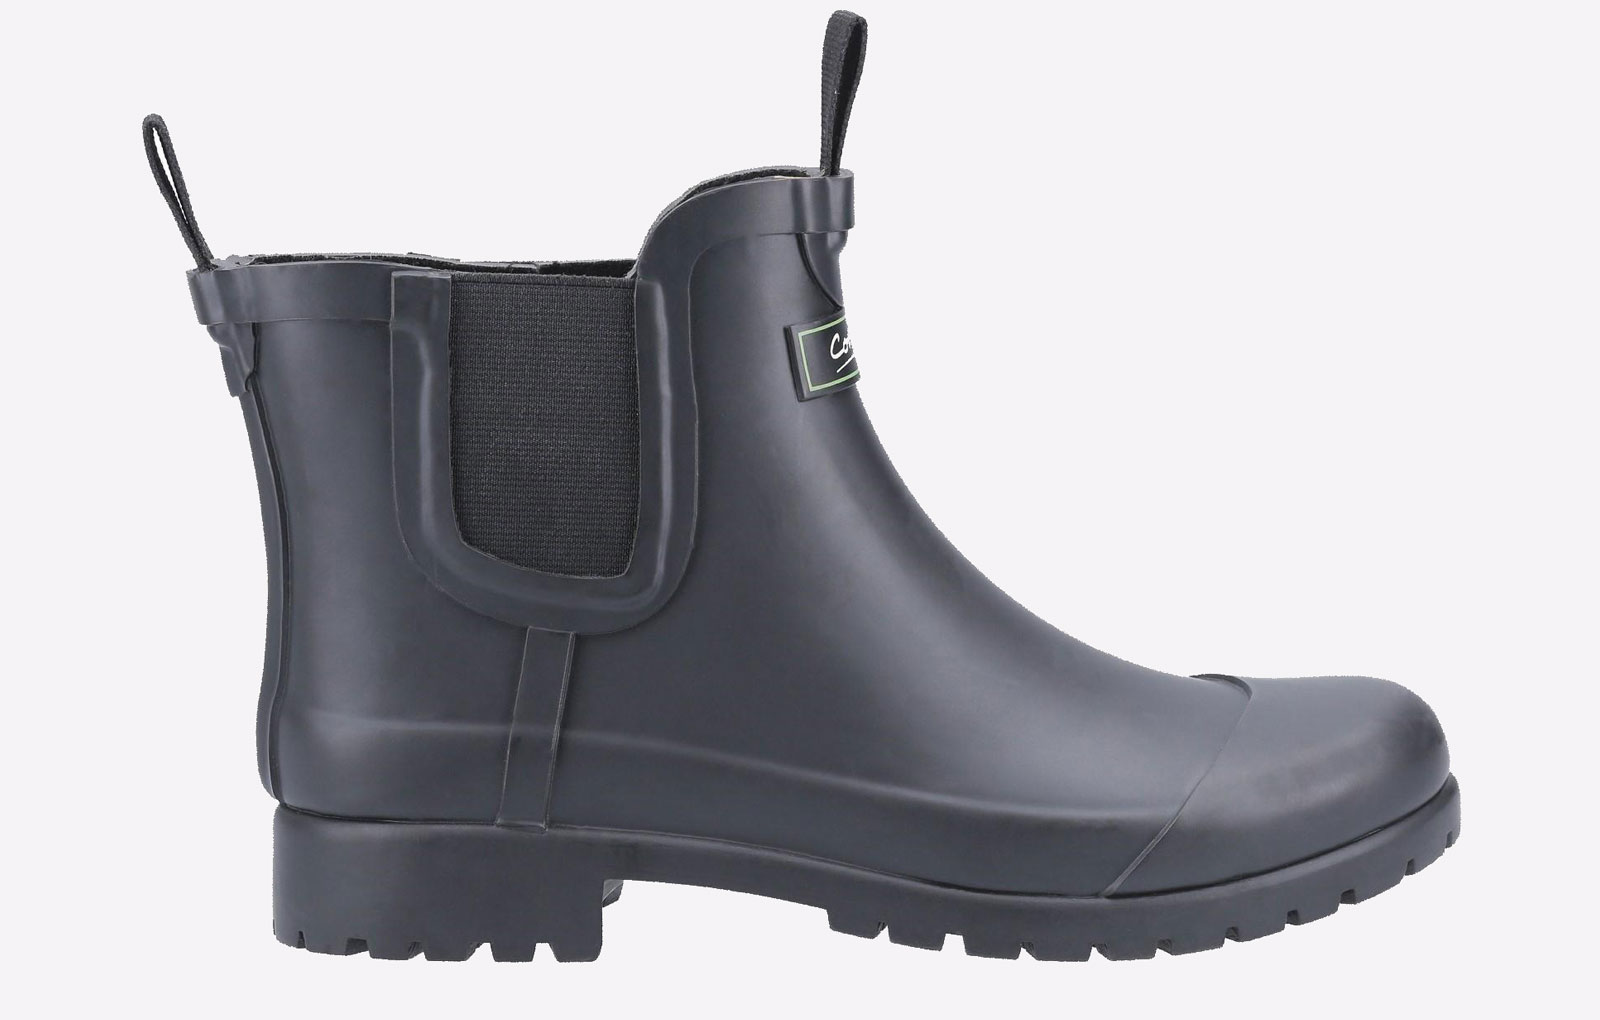 Cotswold Blenheim Waterproof Ankle Boot Womens - GRD-30169-51303-09